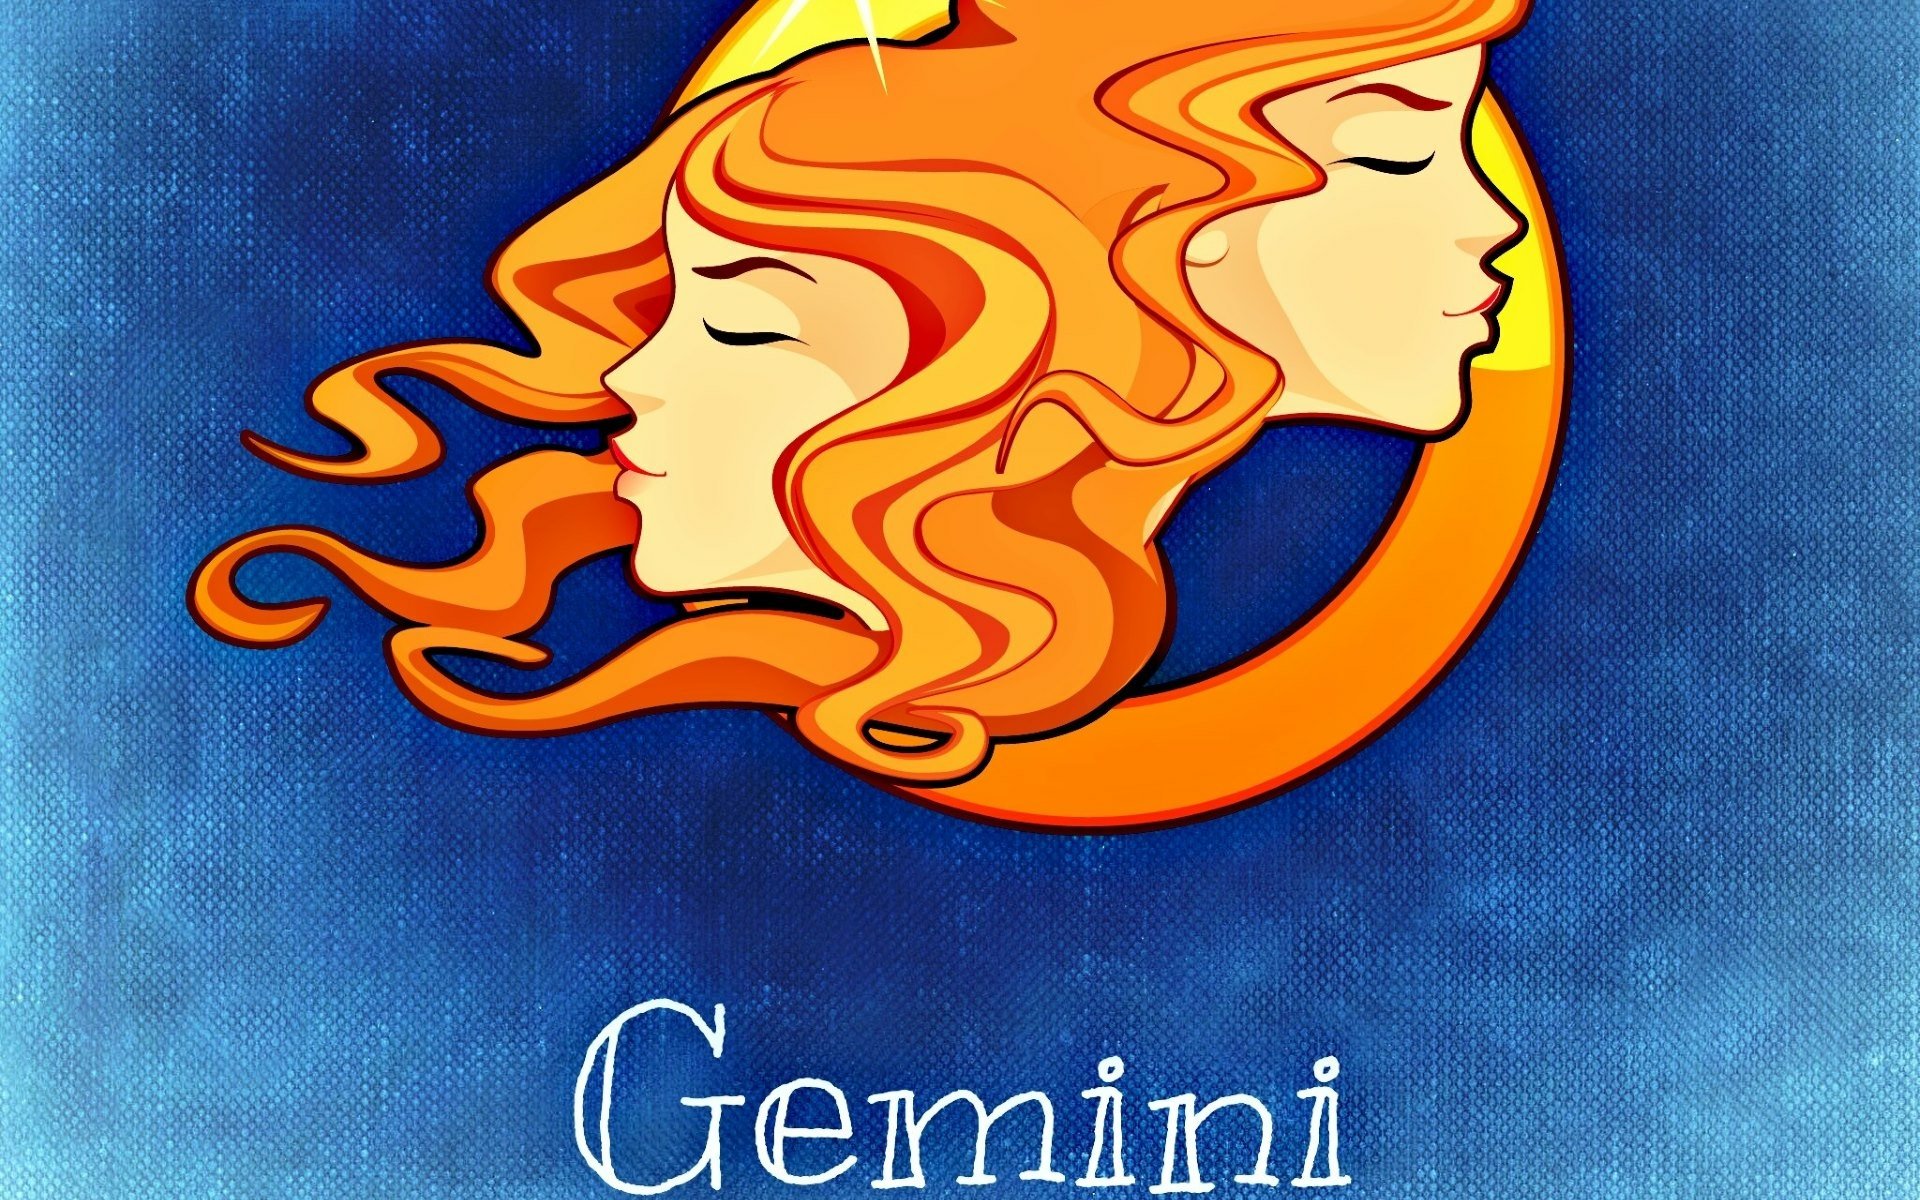 Horoscope Gemini by Alexas_Fotos